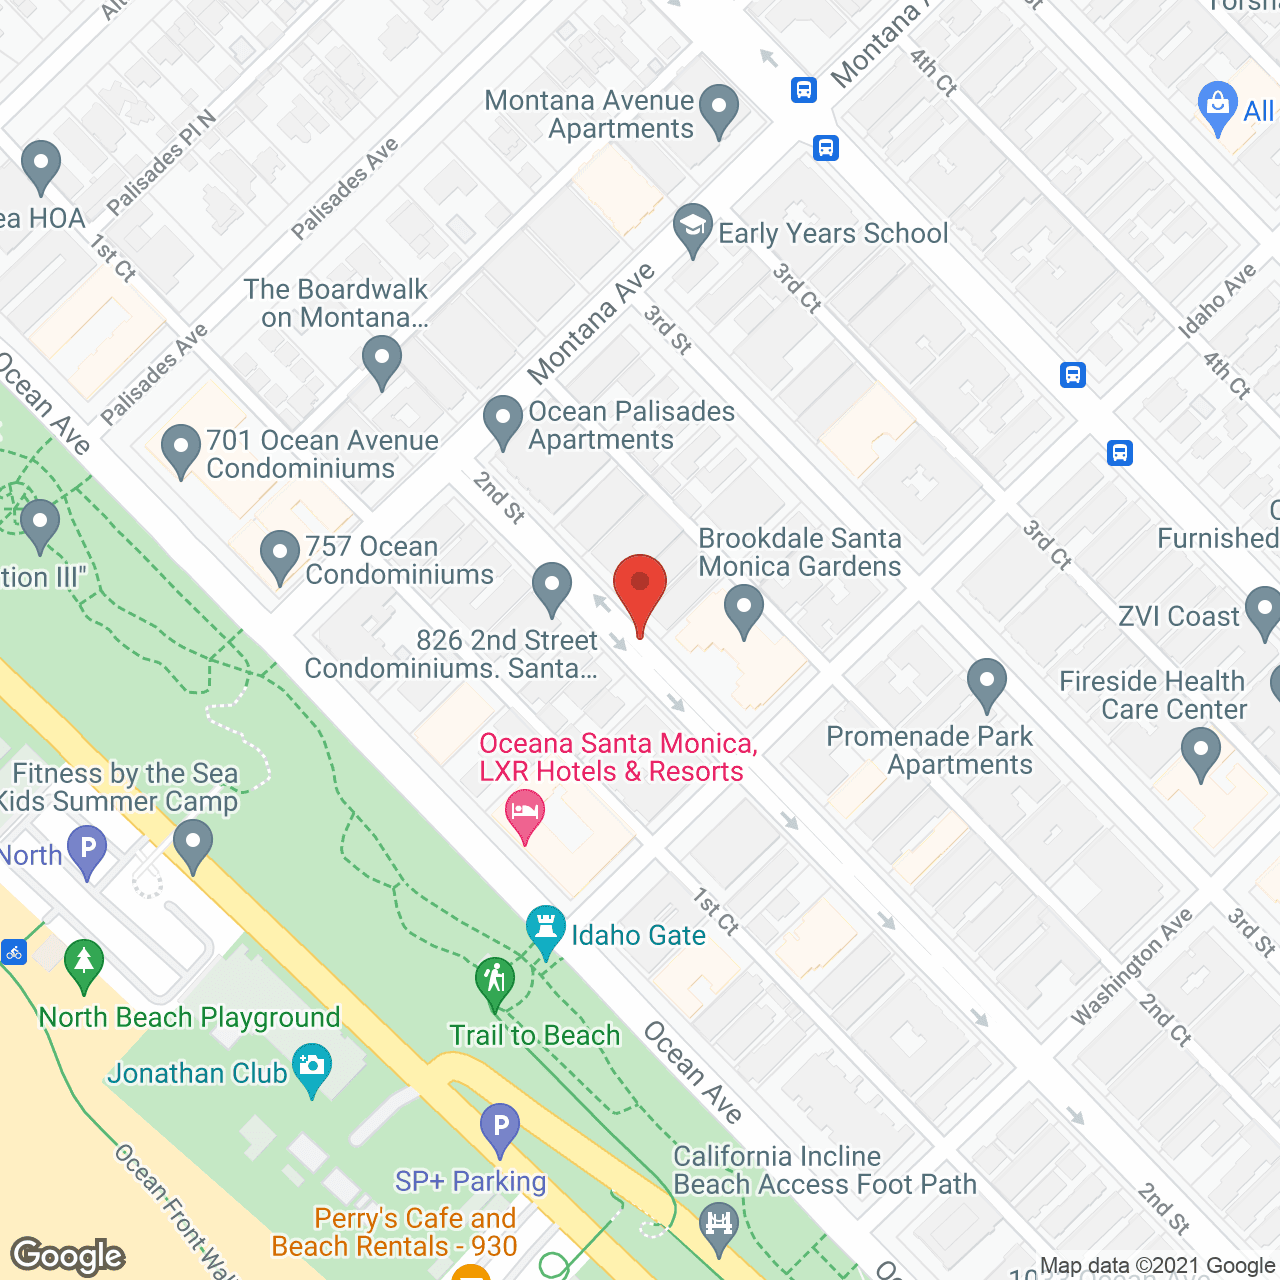 Brookdale Santa Monica Gardens in google map